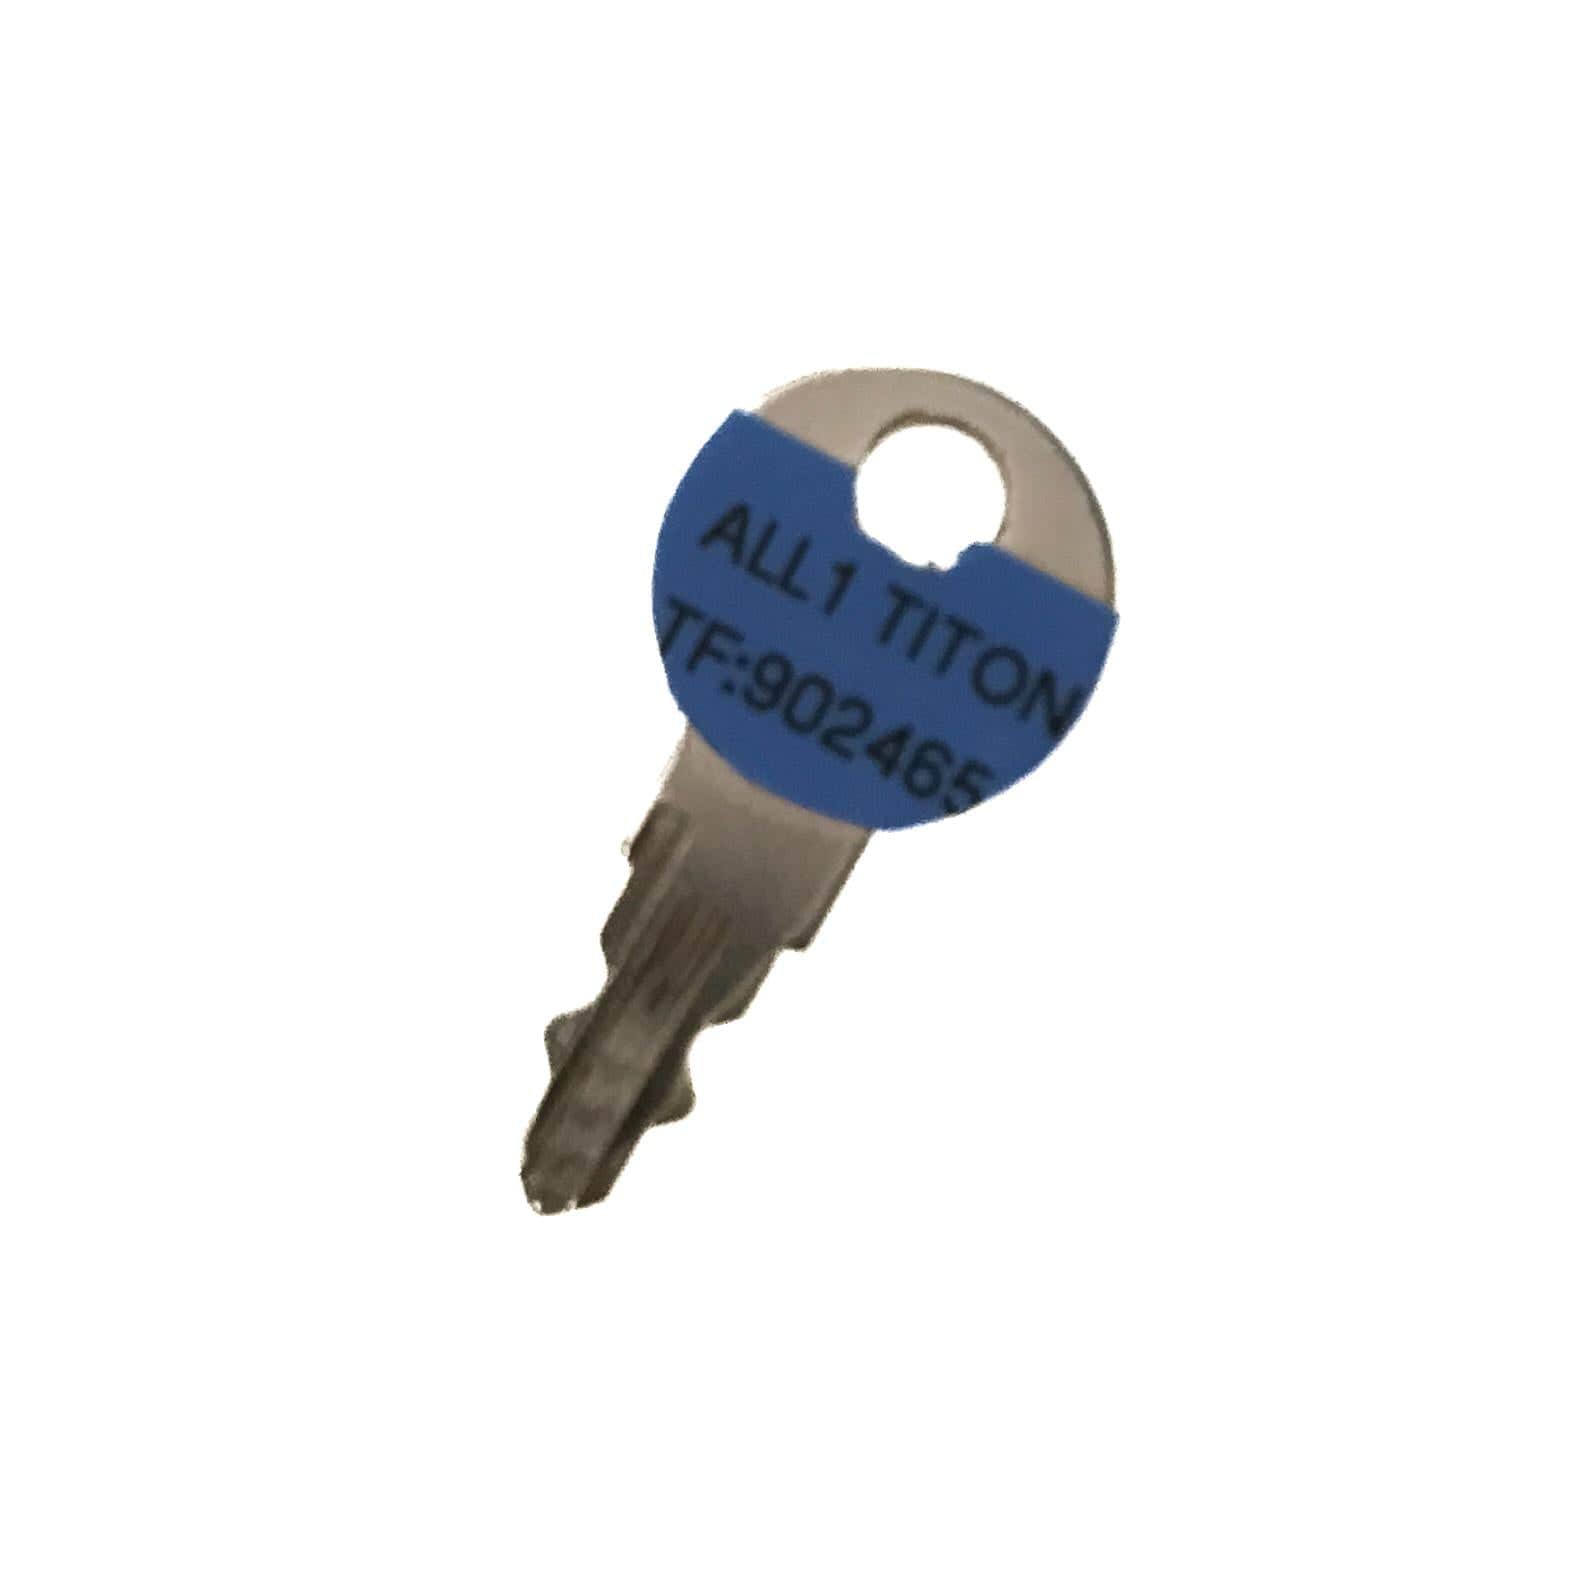 Replacement Window Key ALL1 to Suit Titon Alliance Window Lock Handles Pre Cut Service Item Thunderfix 902465